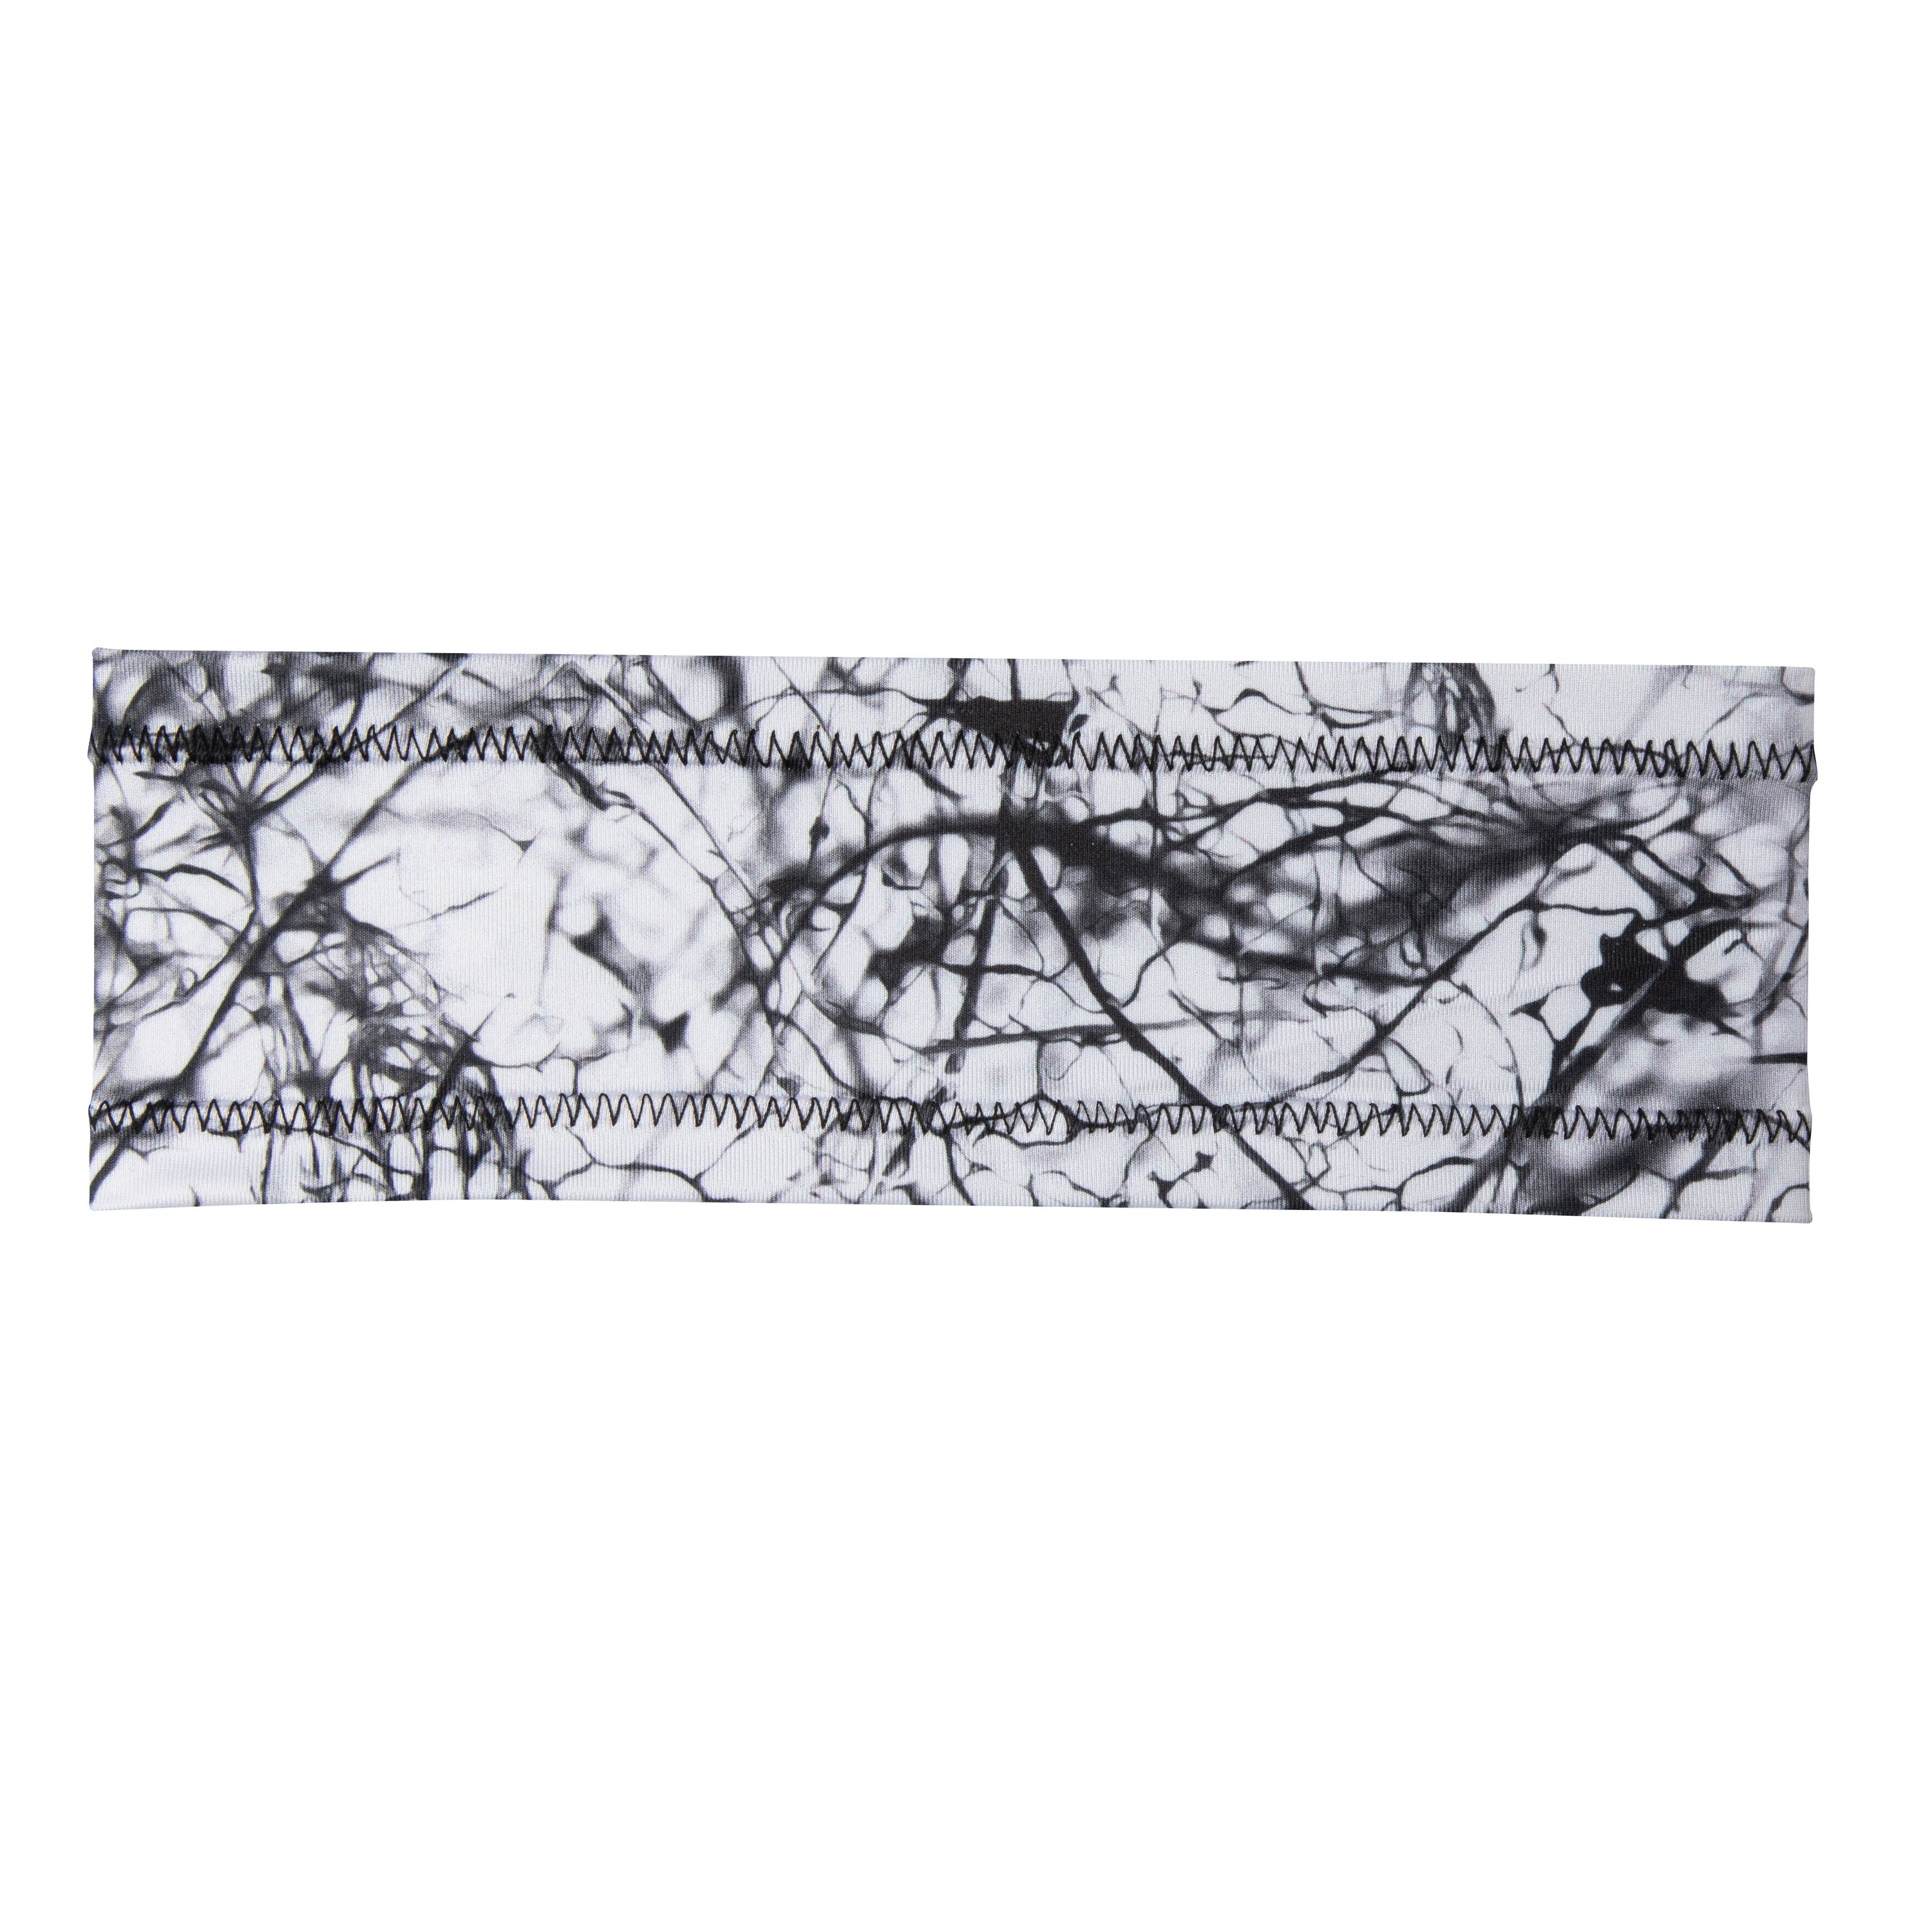 FITLETIC – Headbands Marble schwarz-weiß